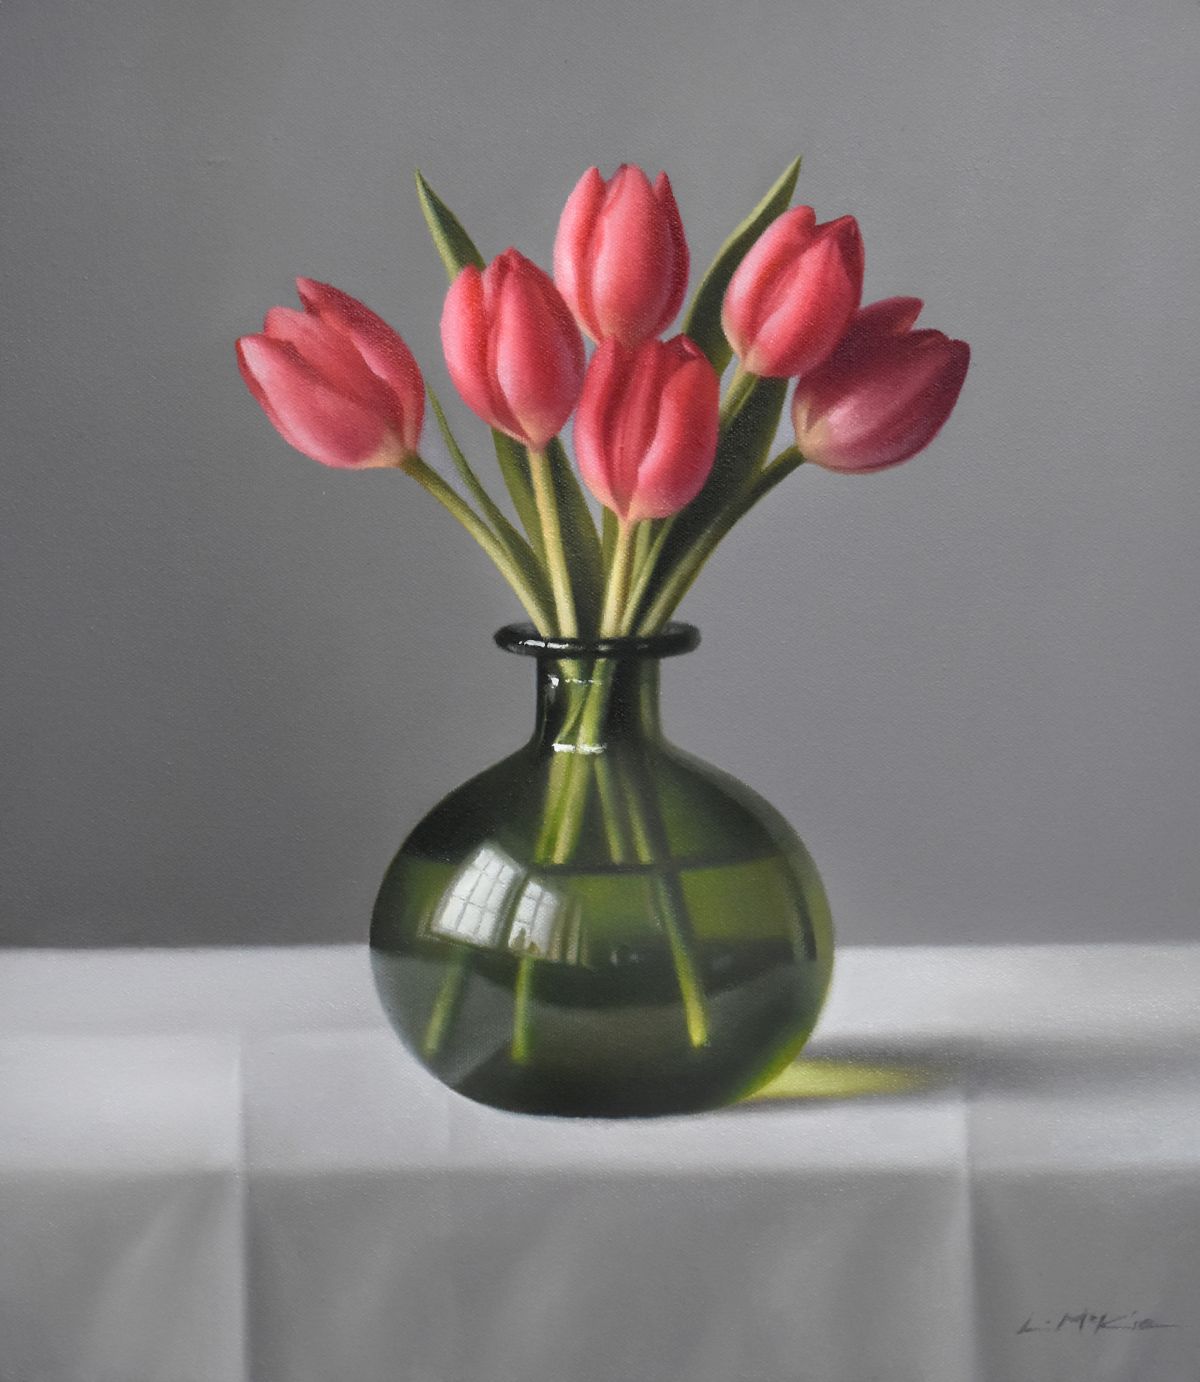 Bright Spring Tulips